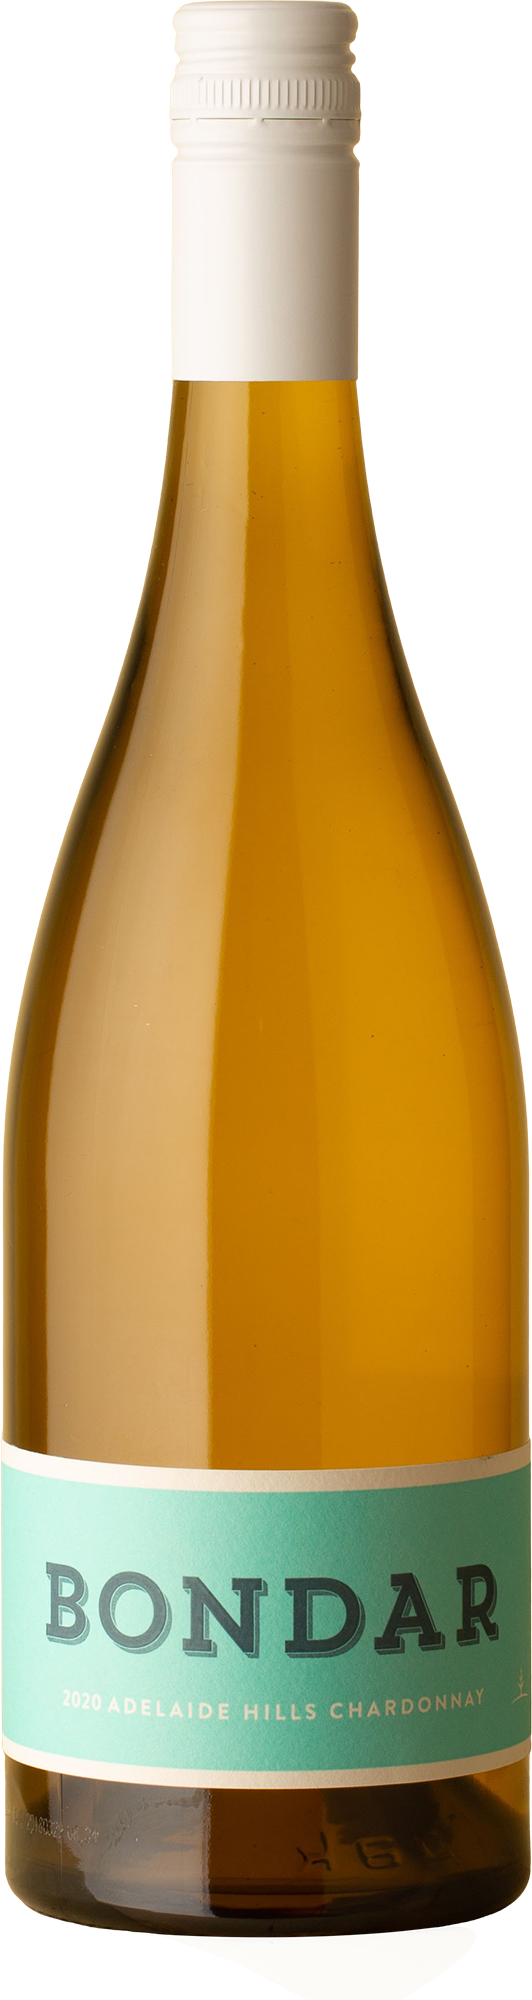 Bondar - Adelaide Hills Chardonnay 2020 White Wine